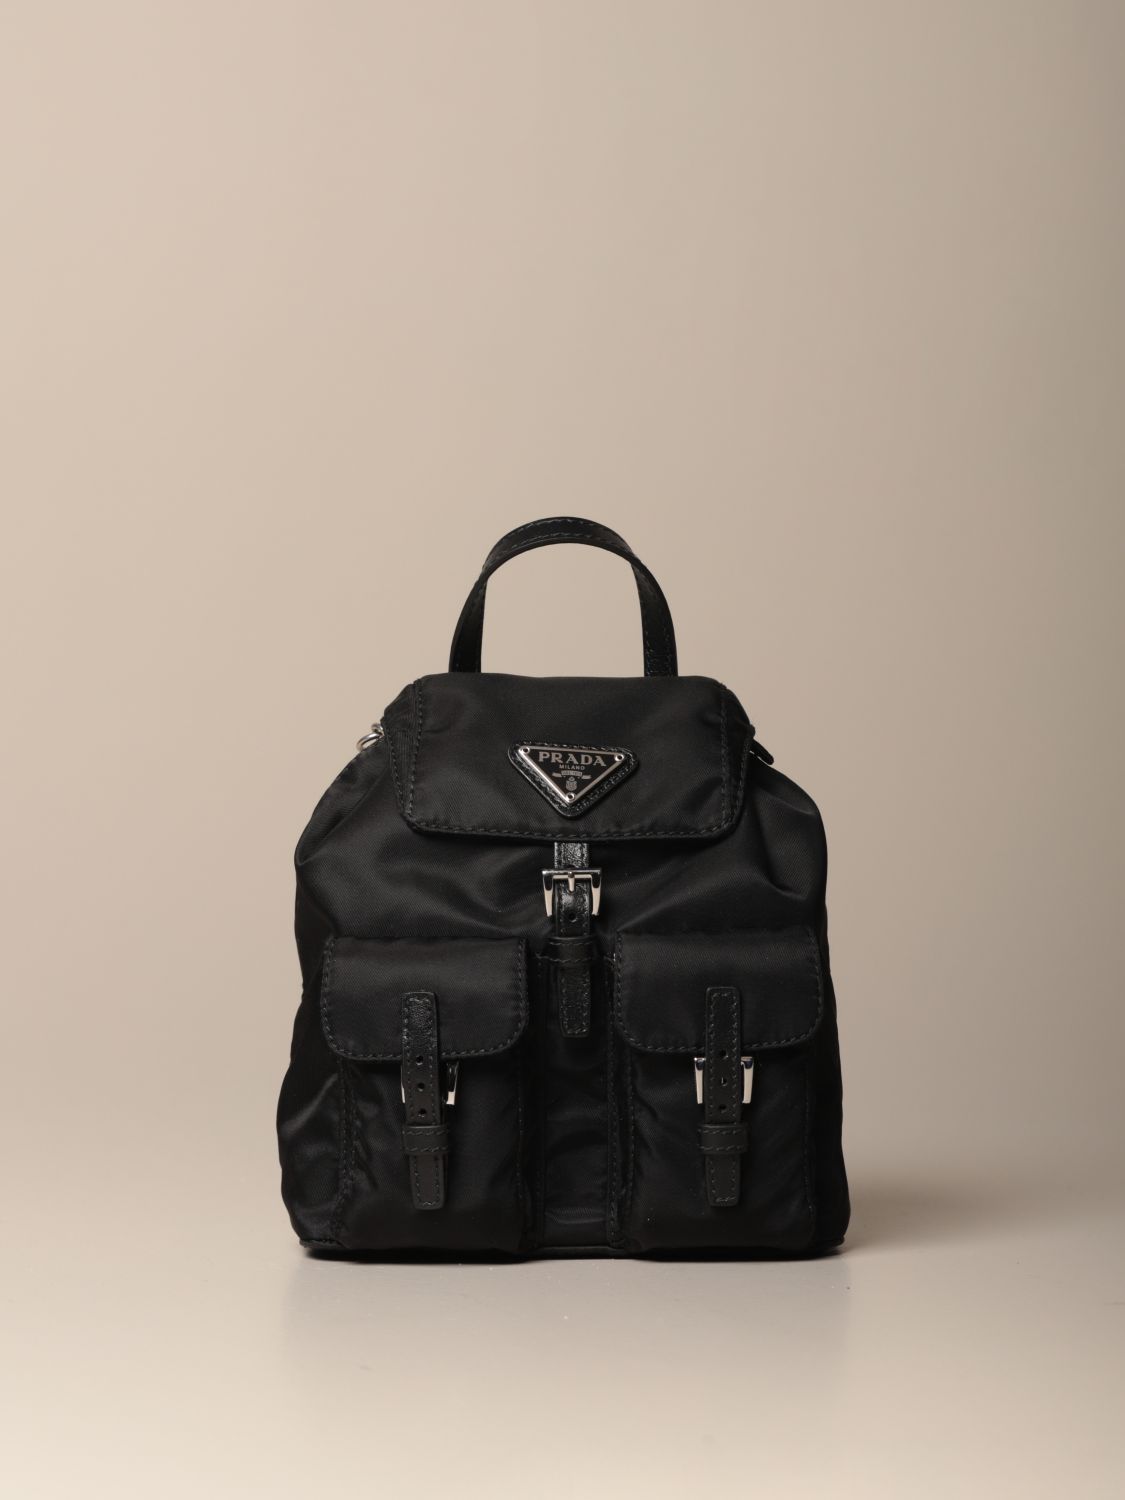 PRADA: Mini nylon backpack with triangular logo - Black | Prada backpack  1BH029 V44 online on 